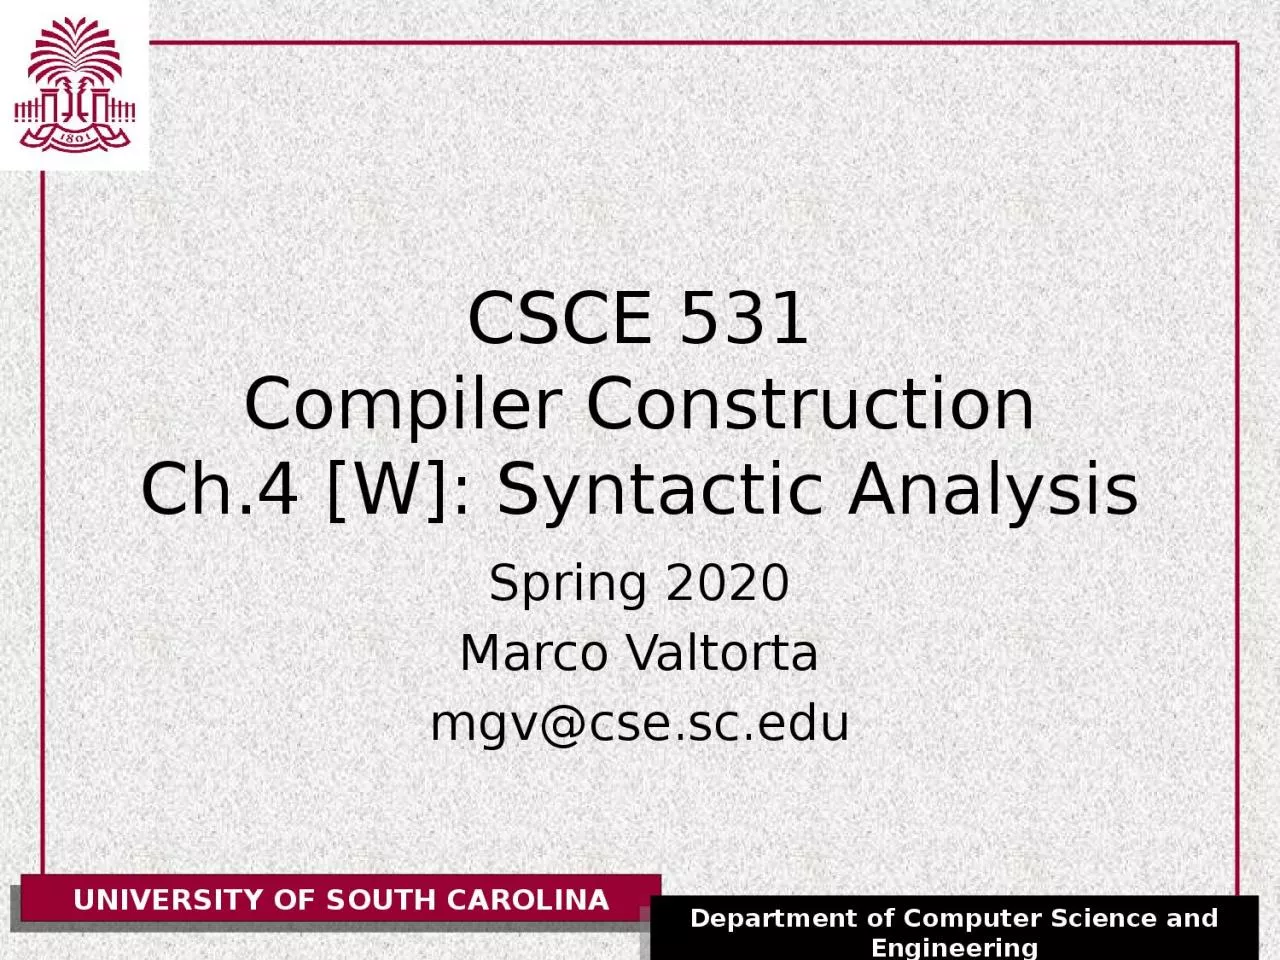 CSCE 531 Compiler Construction